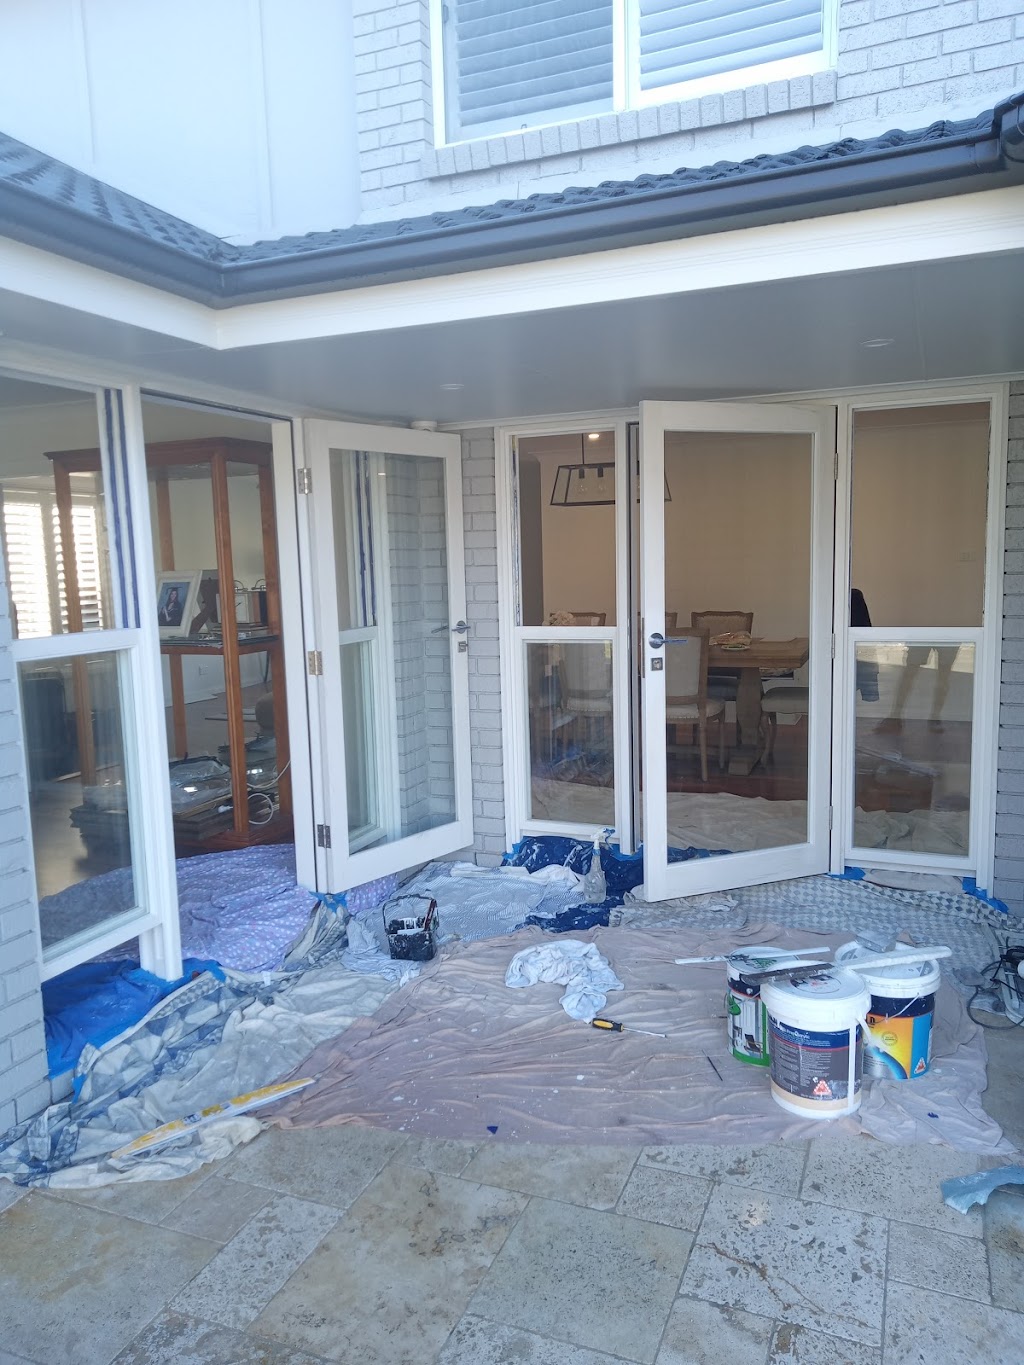 Presleys Property Maintenance |  | Bella Vista NSW 2153, Australia | 0404737251 OR +61 404 737 251